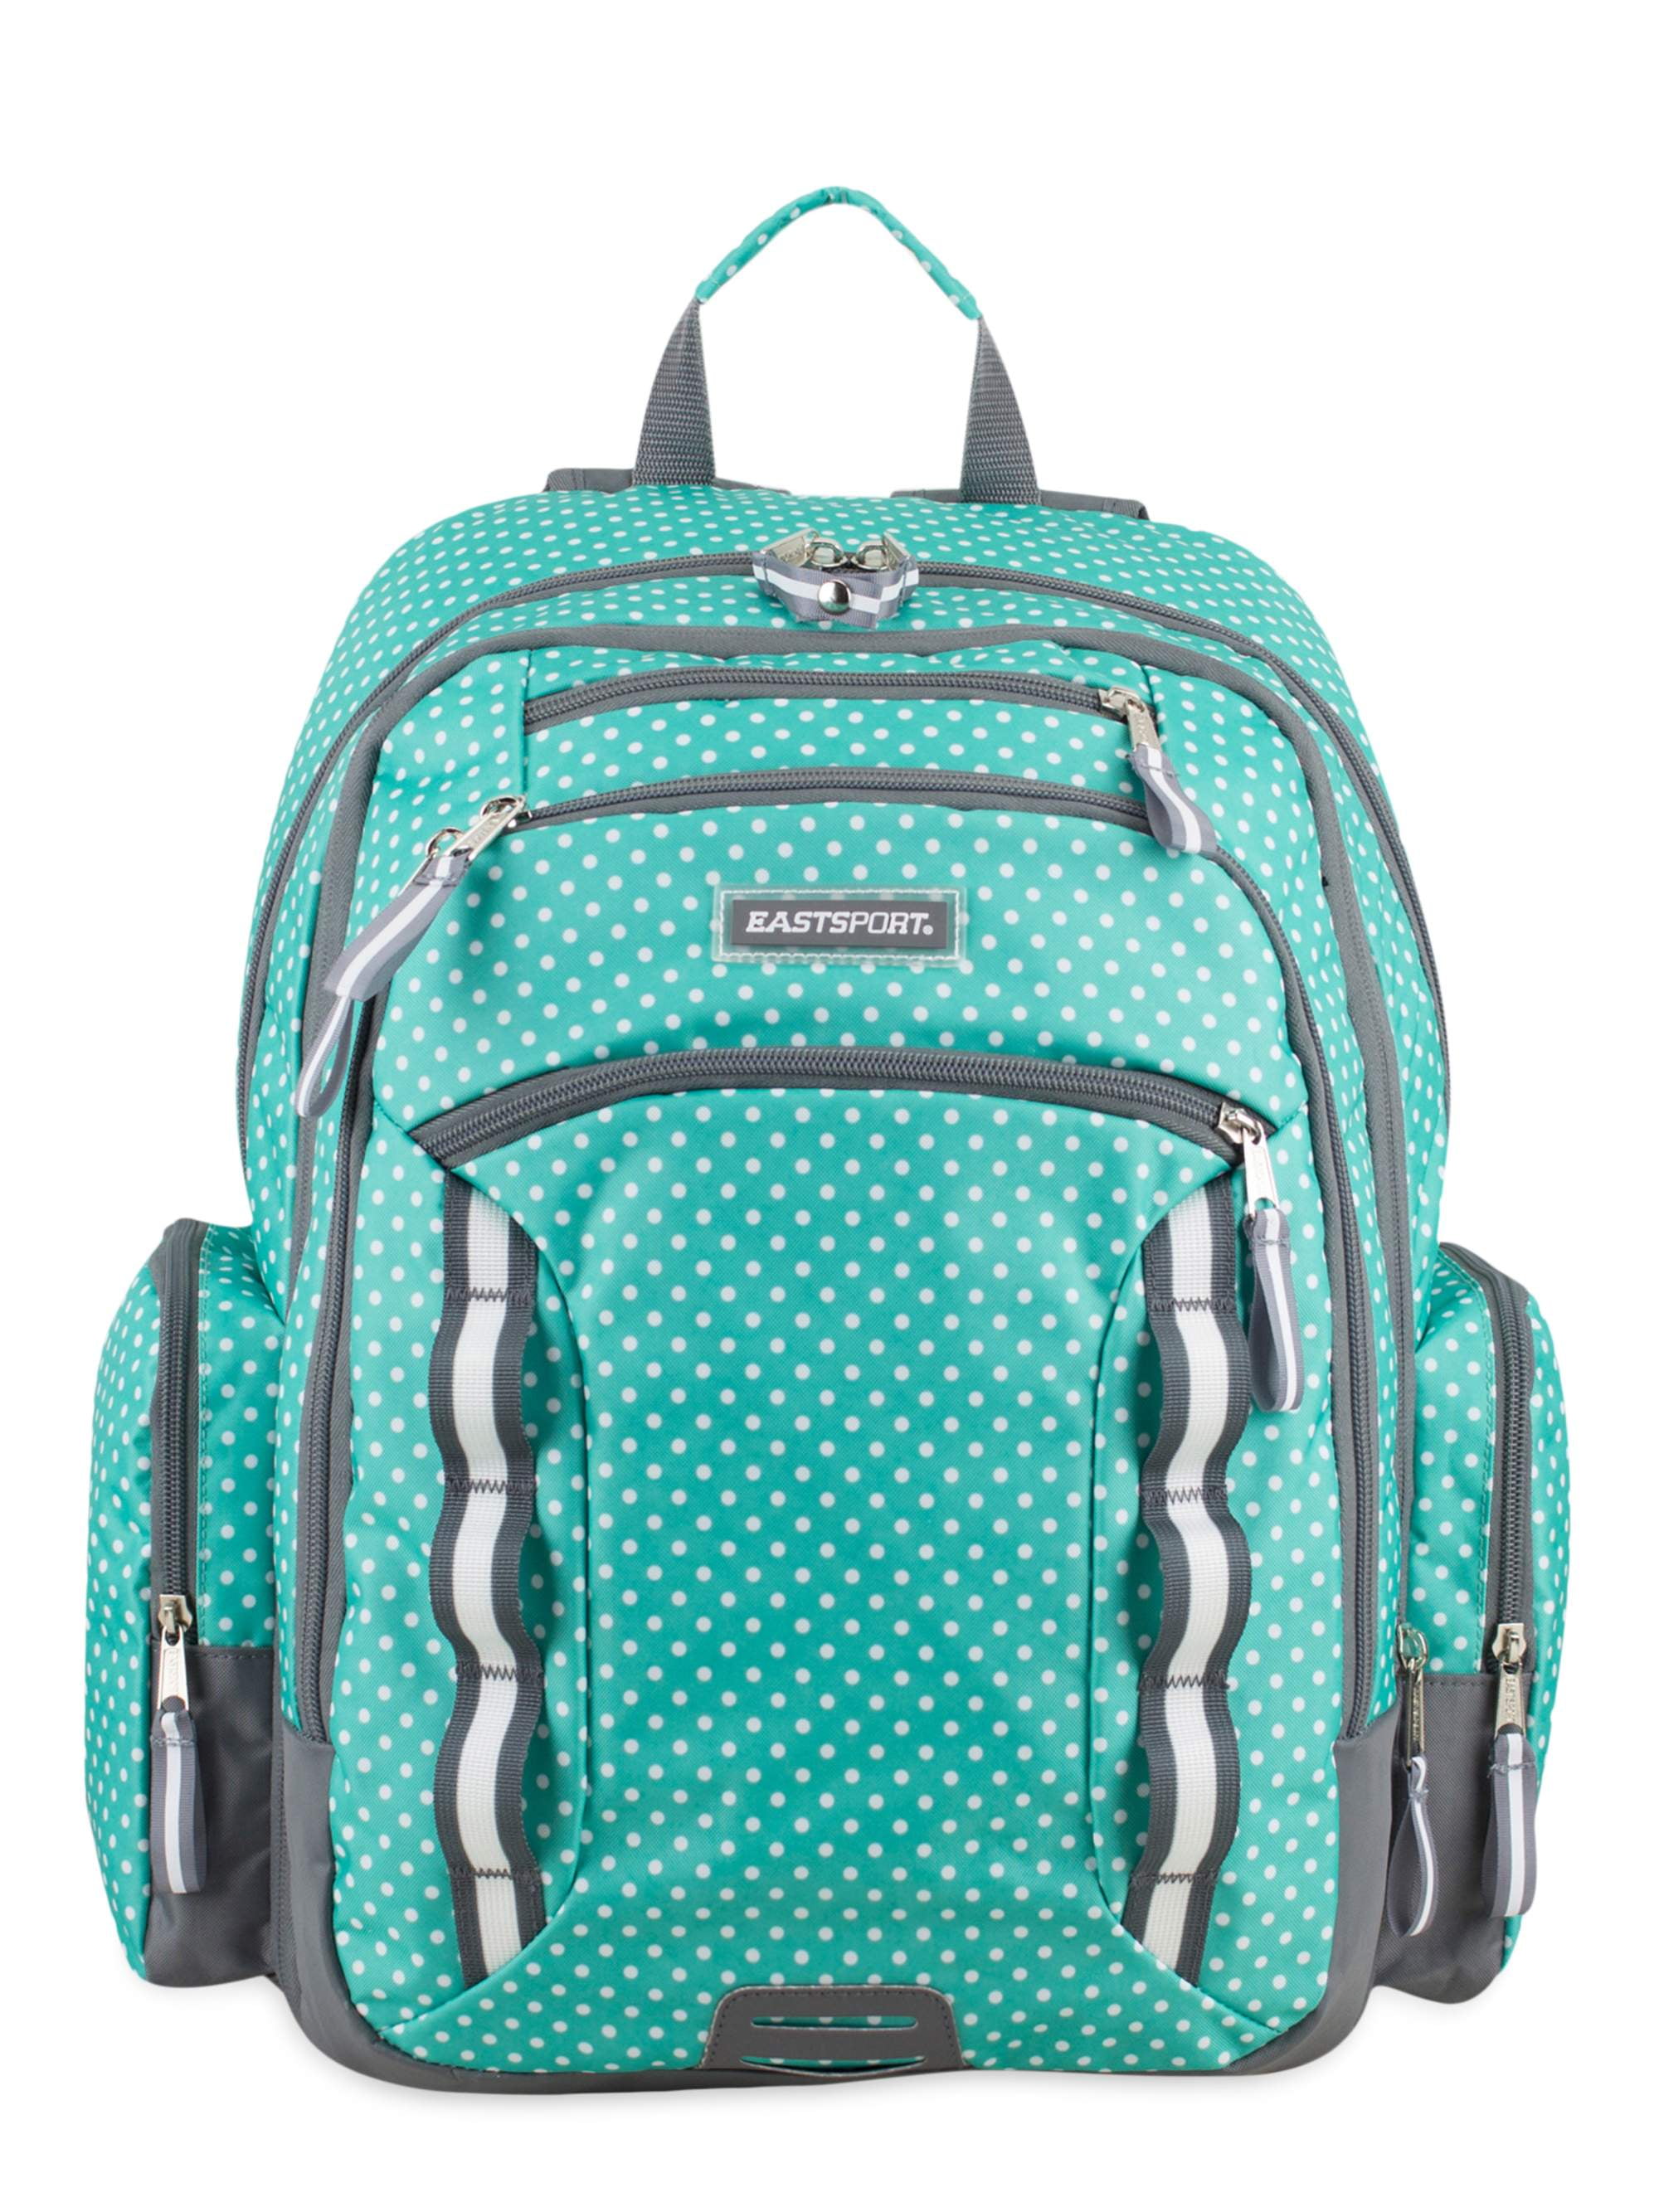 Eastsport Odyssey Turquoise Backpack